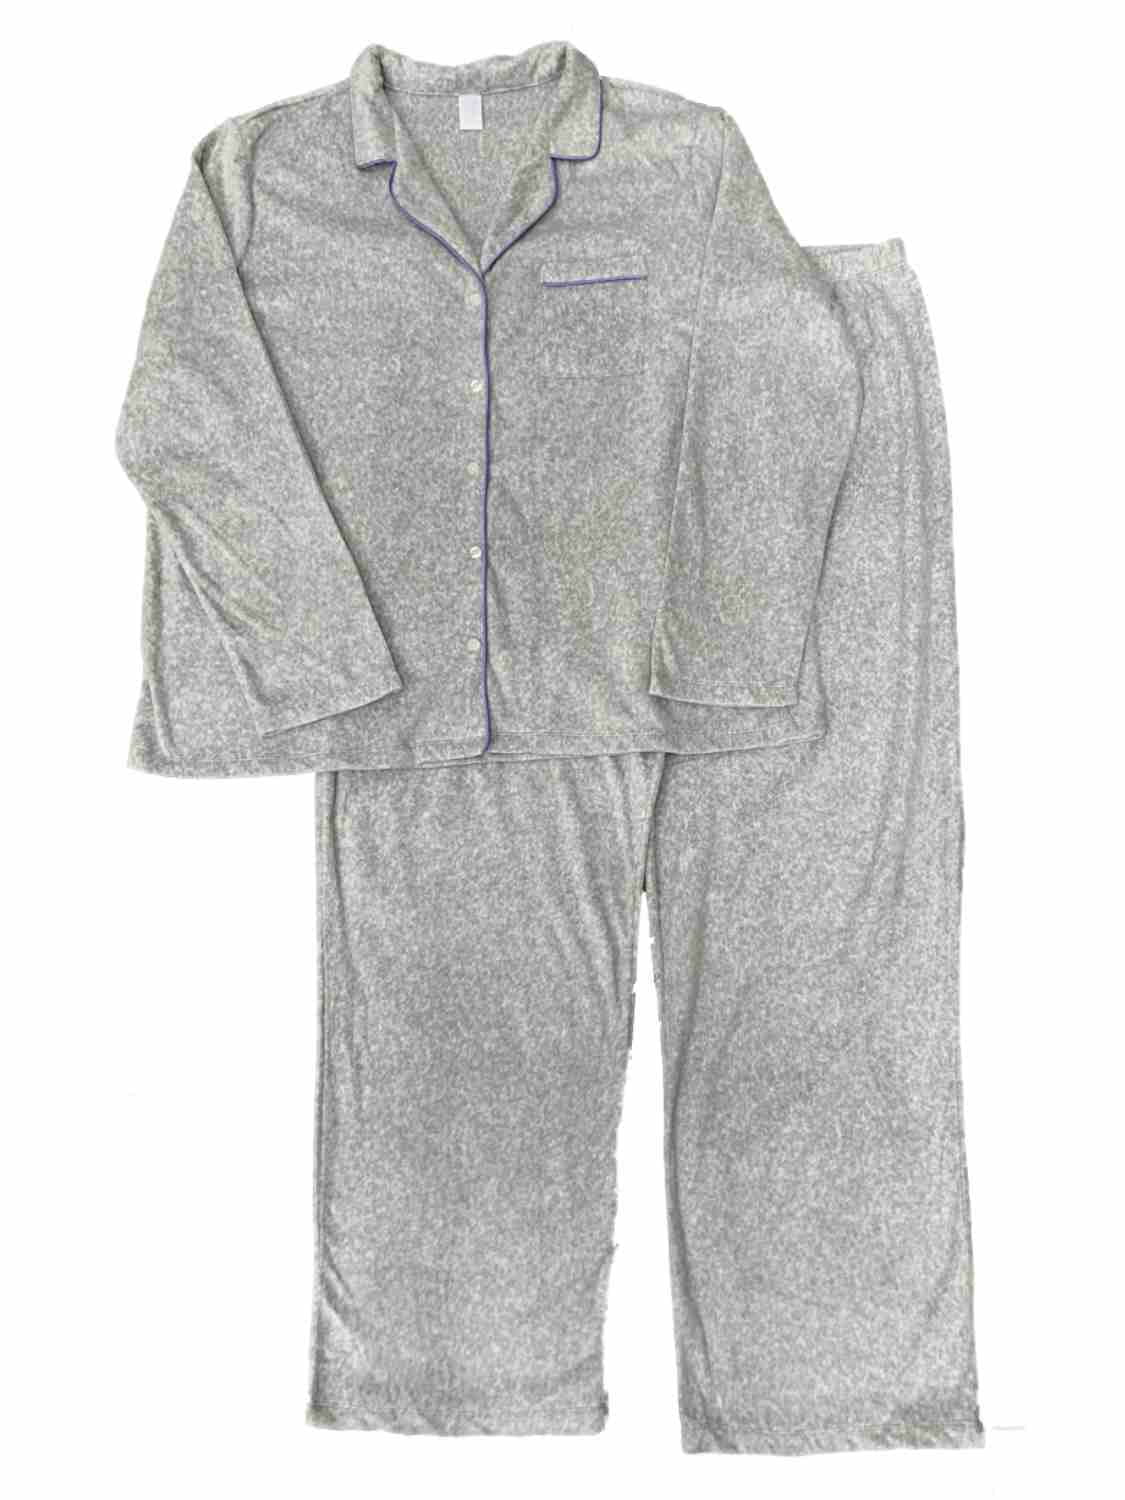 Adonna - Womens Gray & Lavender Trim Fleece Pajamas Button Front ...